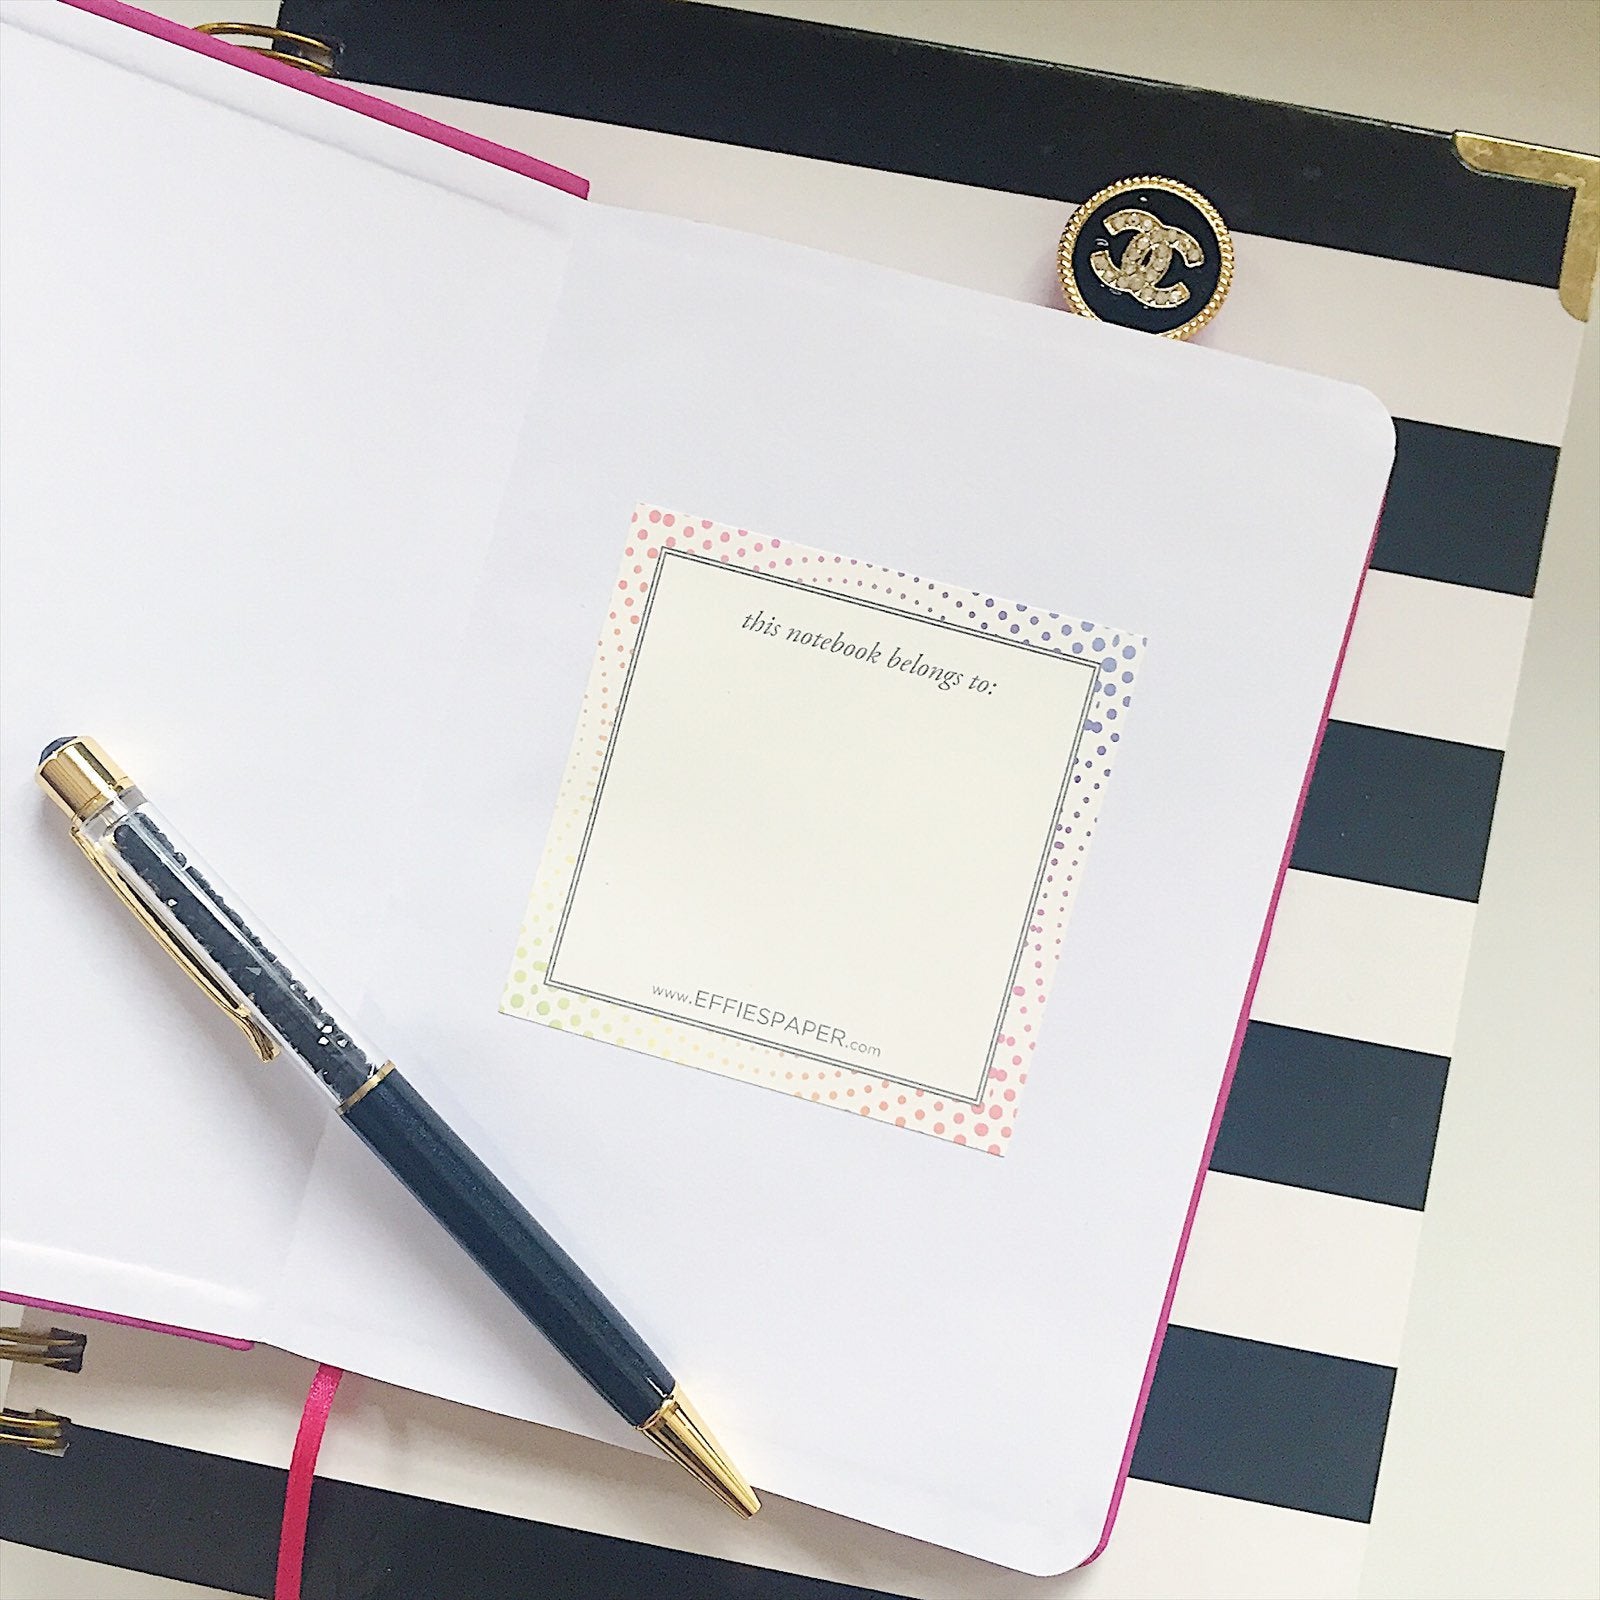 GRL PWR :: Notebook,   - Effie's Paper